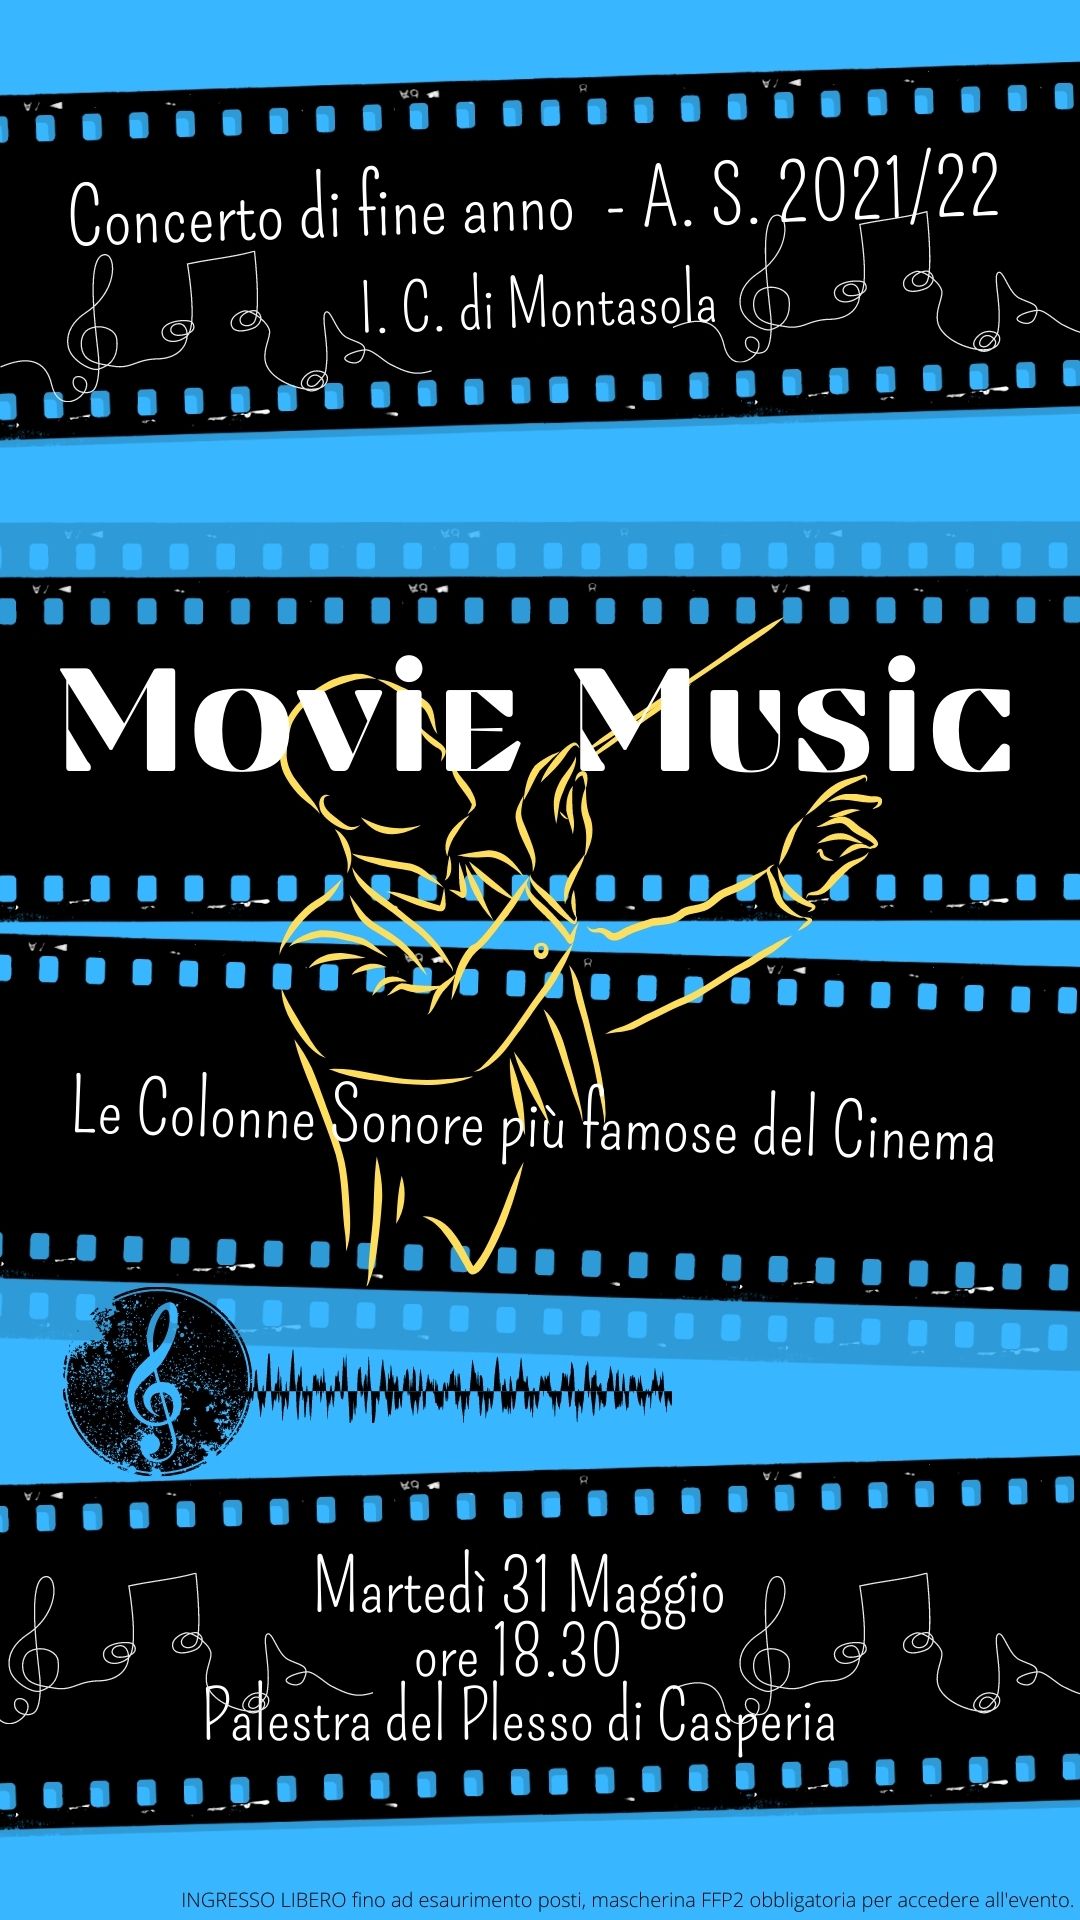 Concerto MOVIE MUSIC 31.05.22